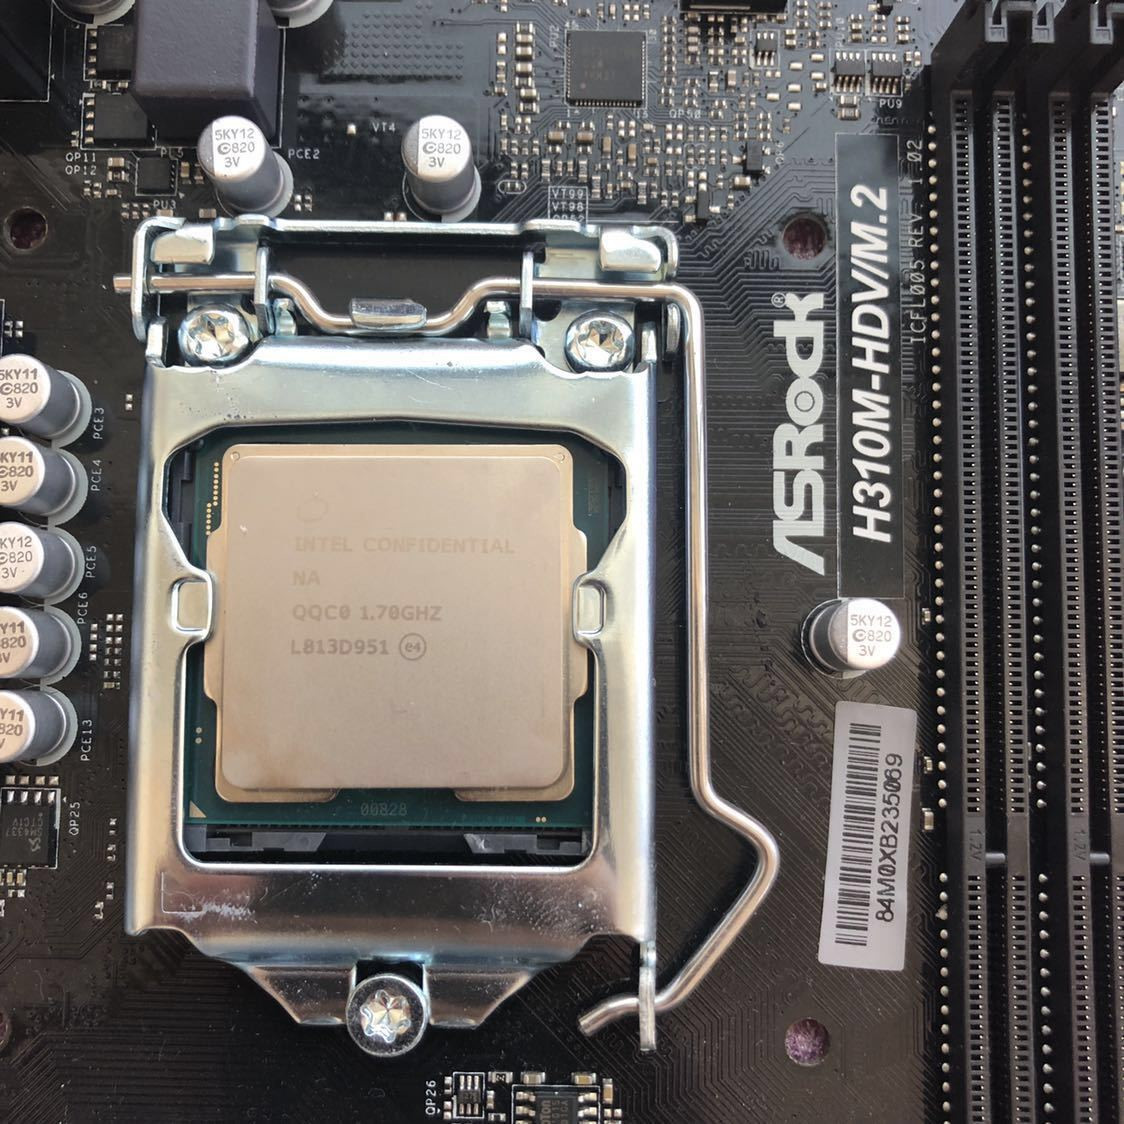 kmmhshkarcwzjbt6 คาด Intel พร้อมเปิดตัวซีพียูรุ่นใหม่กินไฟต่ำ Intel Core i9 9900T มีอัตราบริโภคไฟที่ 35W เน้นประหยัดพลังงานโดยเฉพาะ 